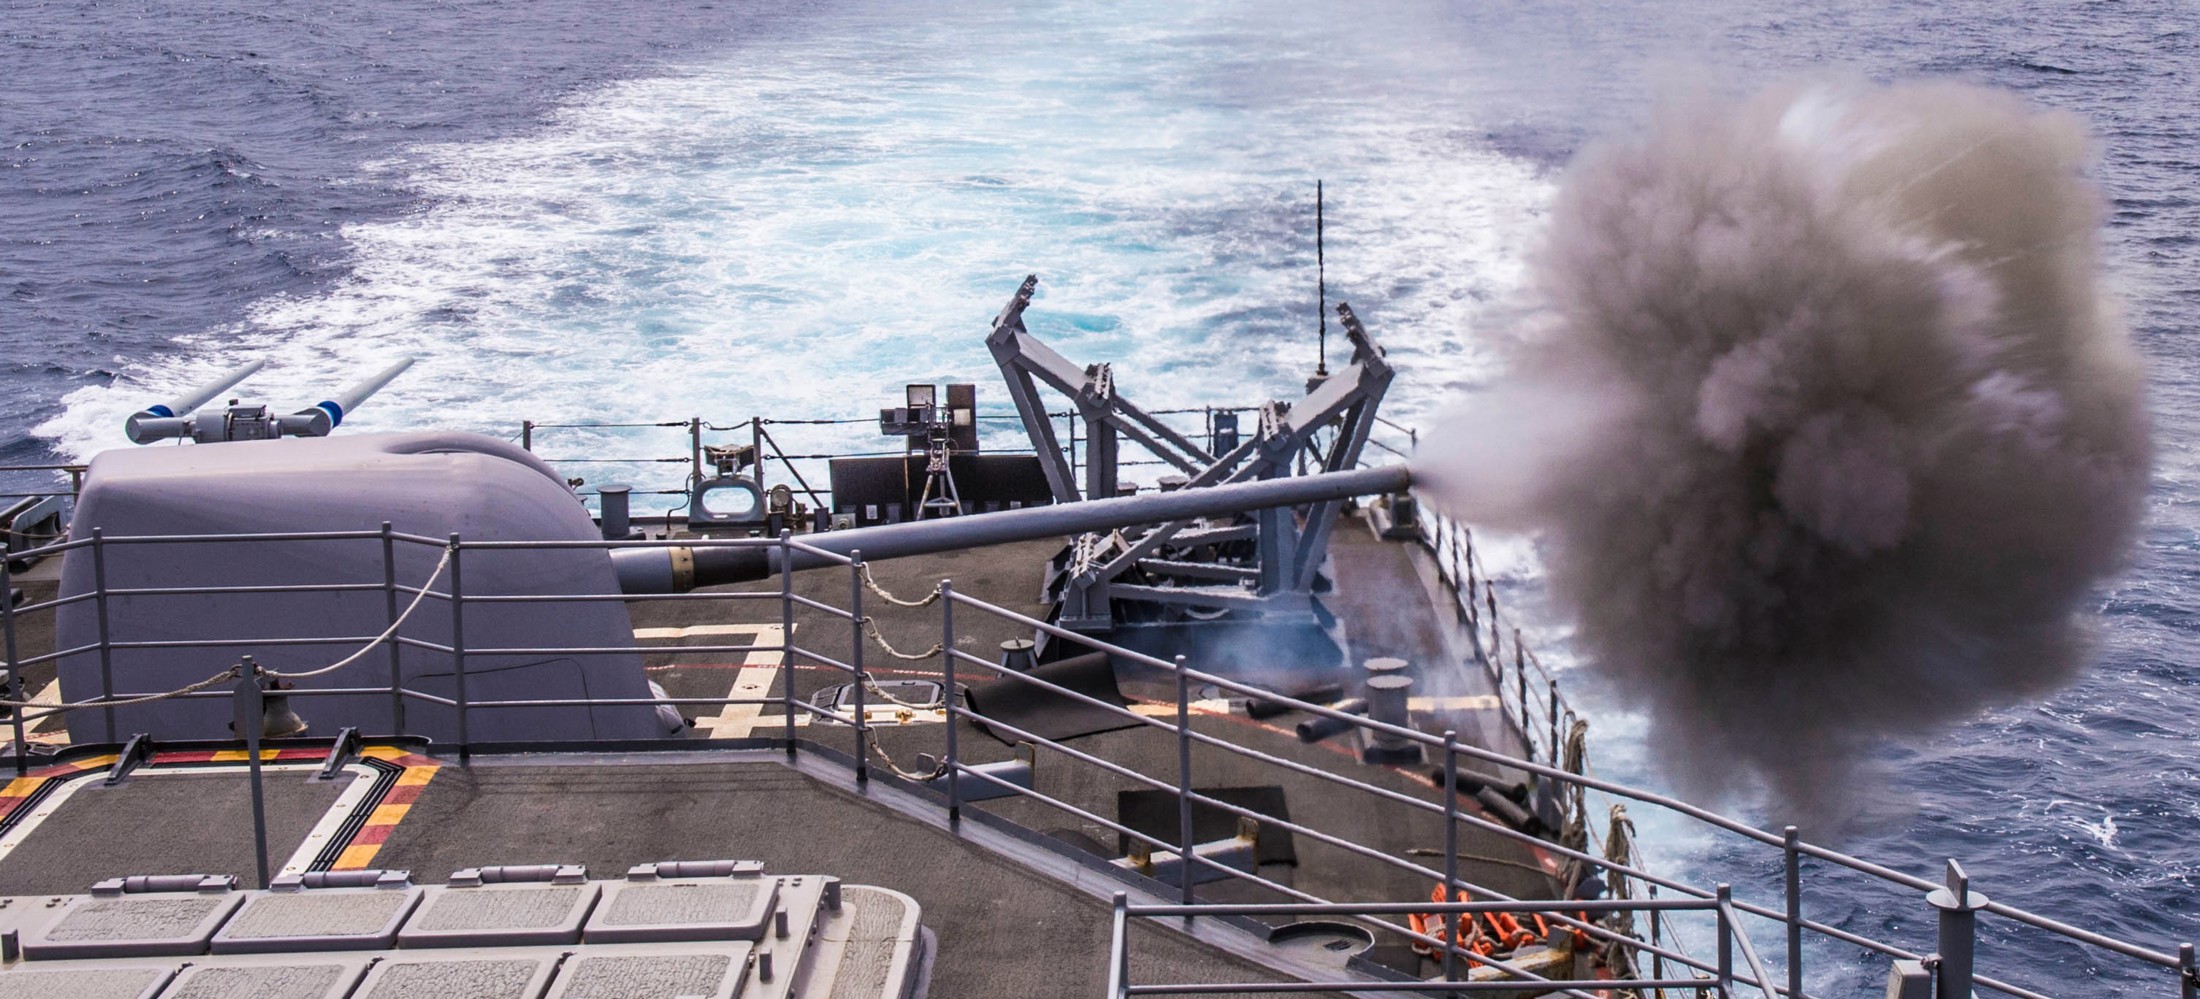 cg-73 uss port royal ticonderoga class guided missile cruiser navy 04 mk-45 gun fire